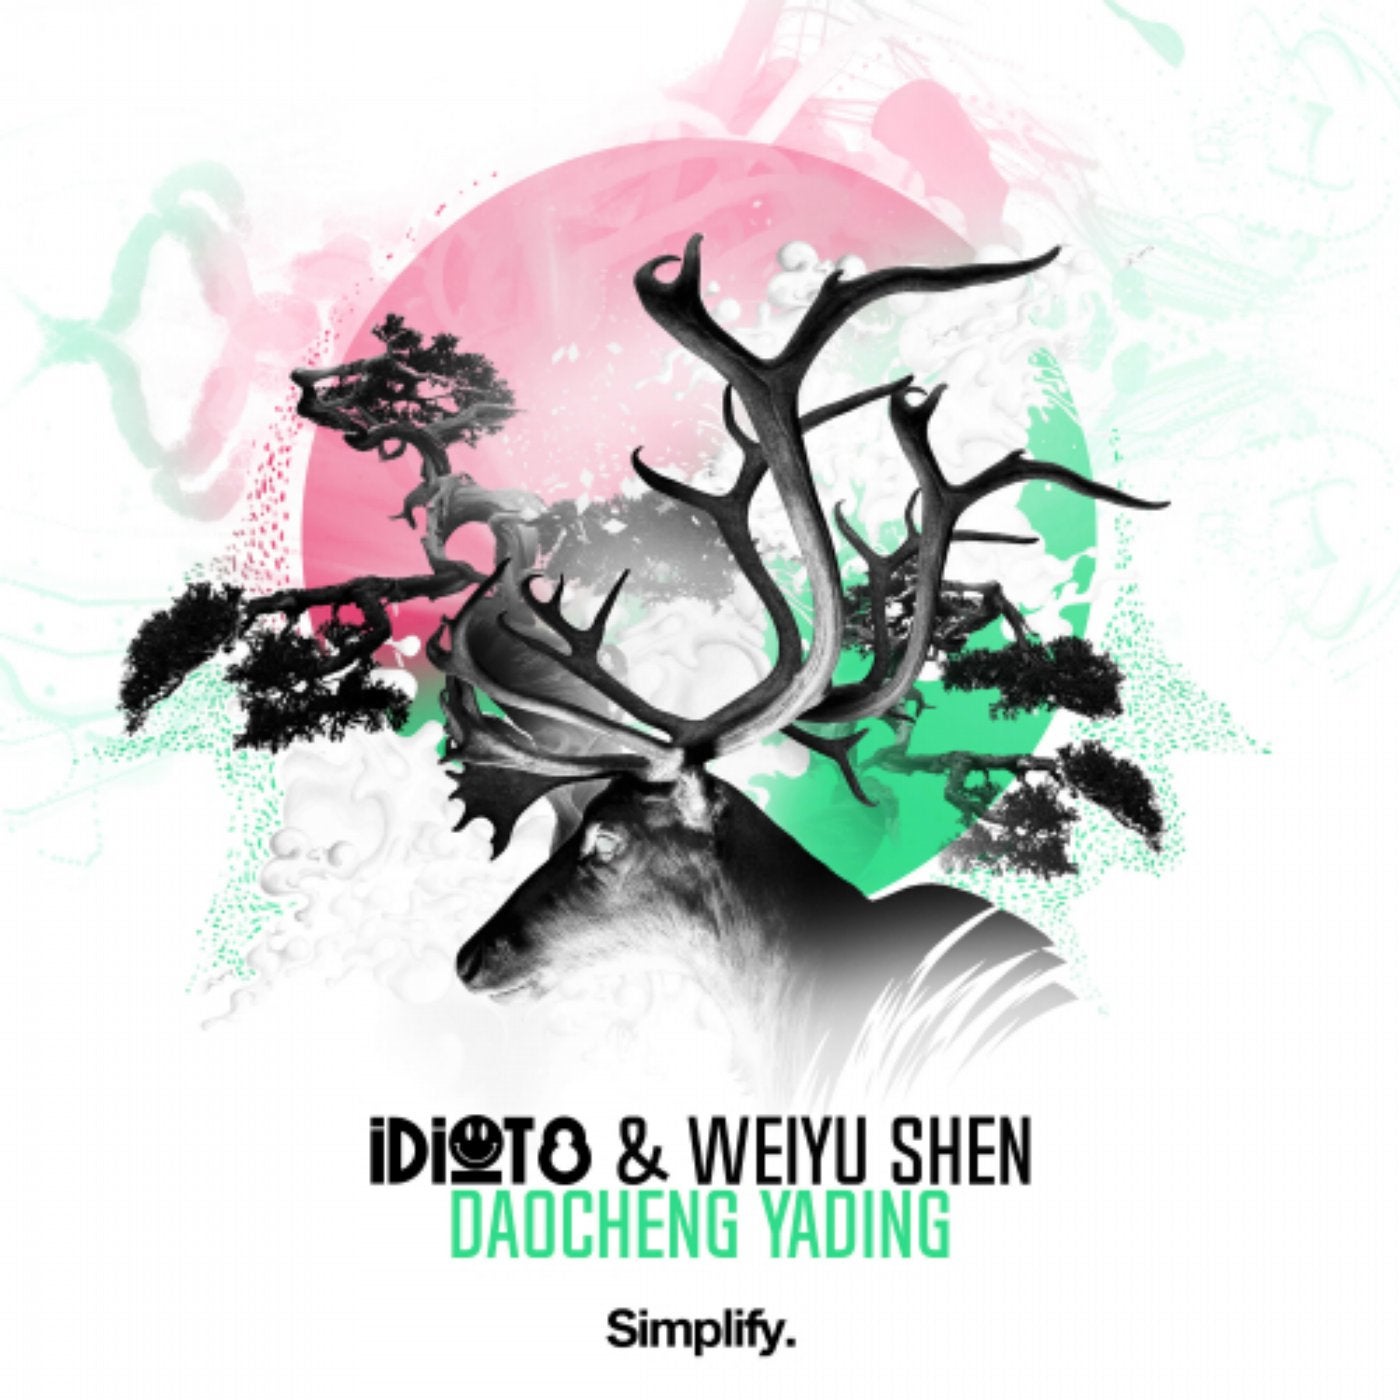 Daocheng Yading